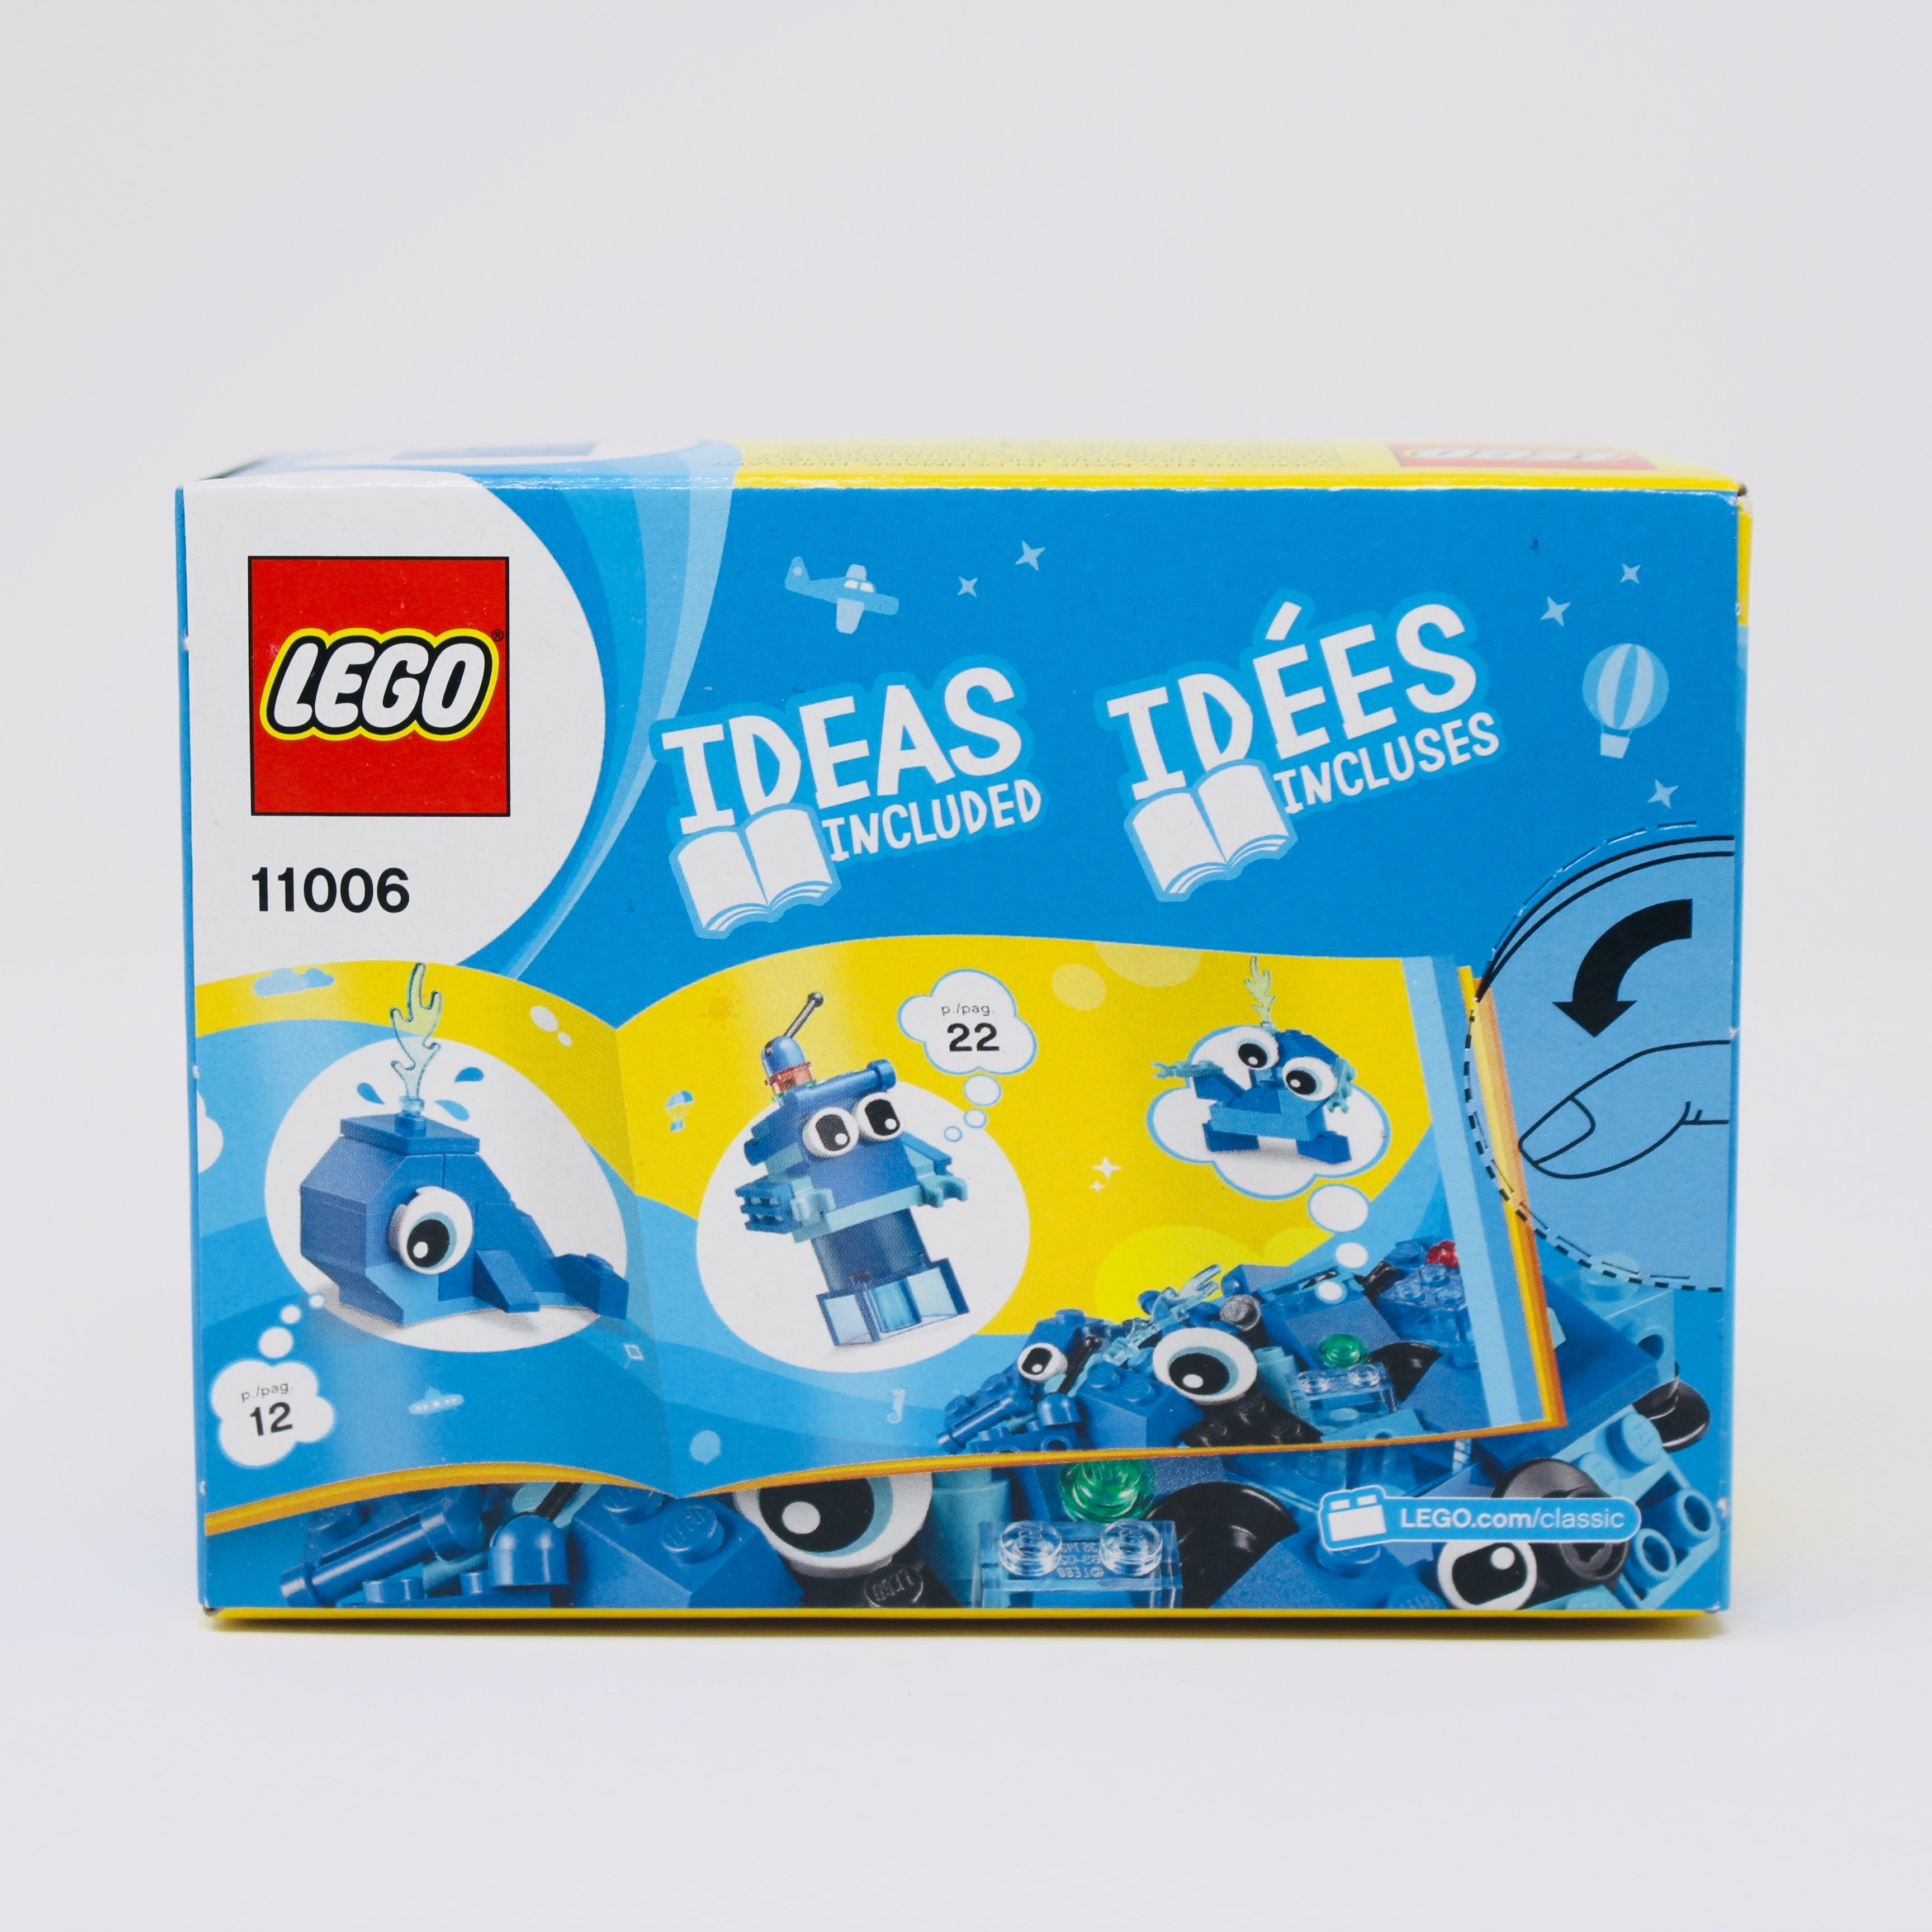 11006 Classic Creative Blue Bricks